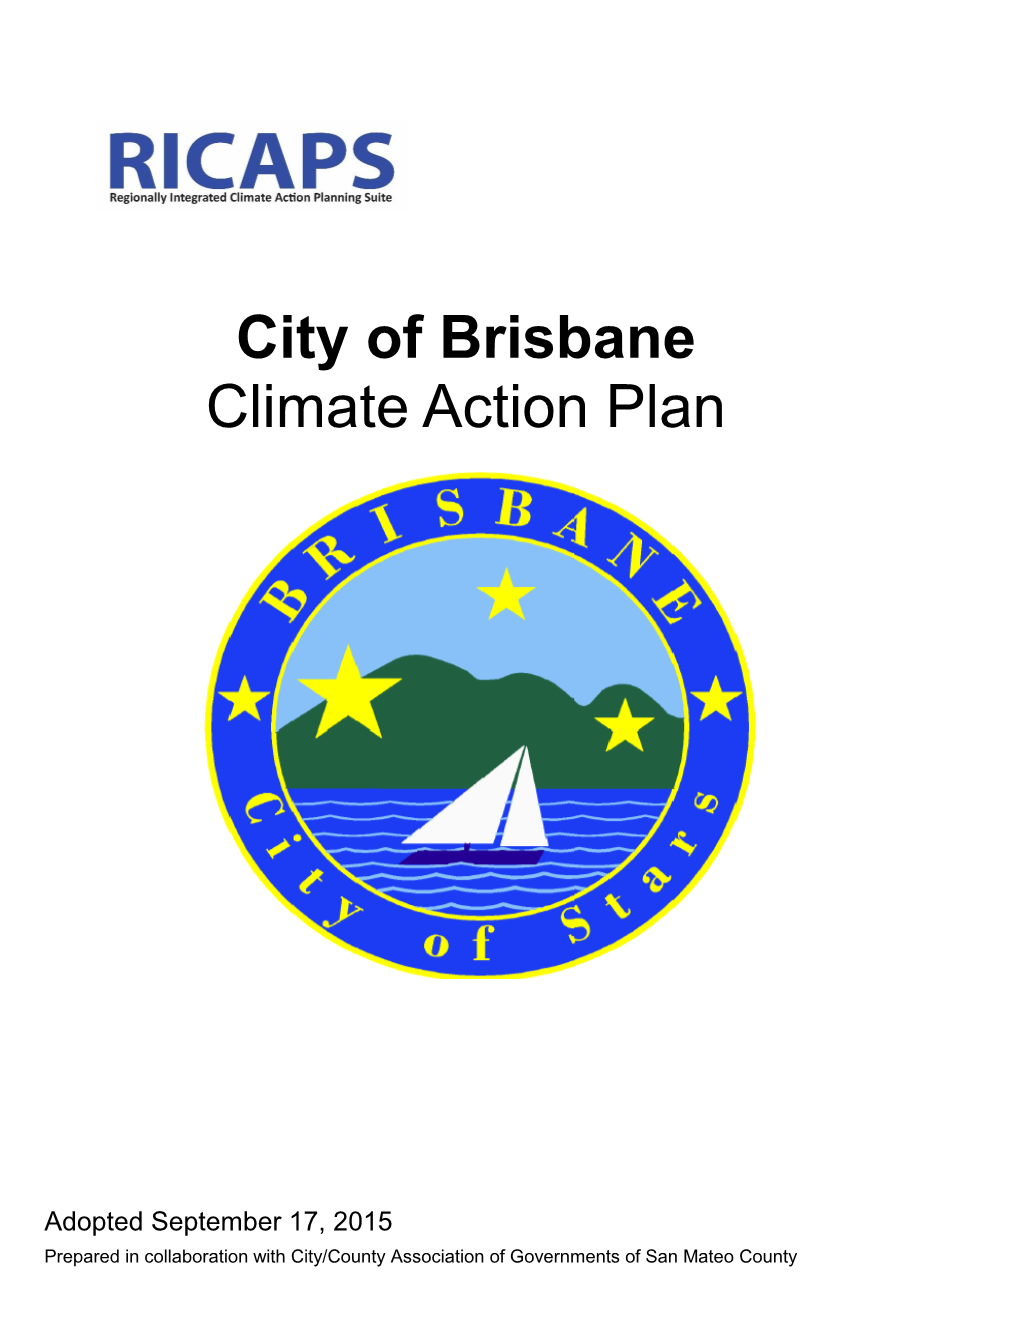 City of Brisbane Climate Action Plan